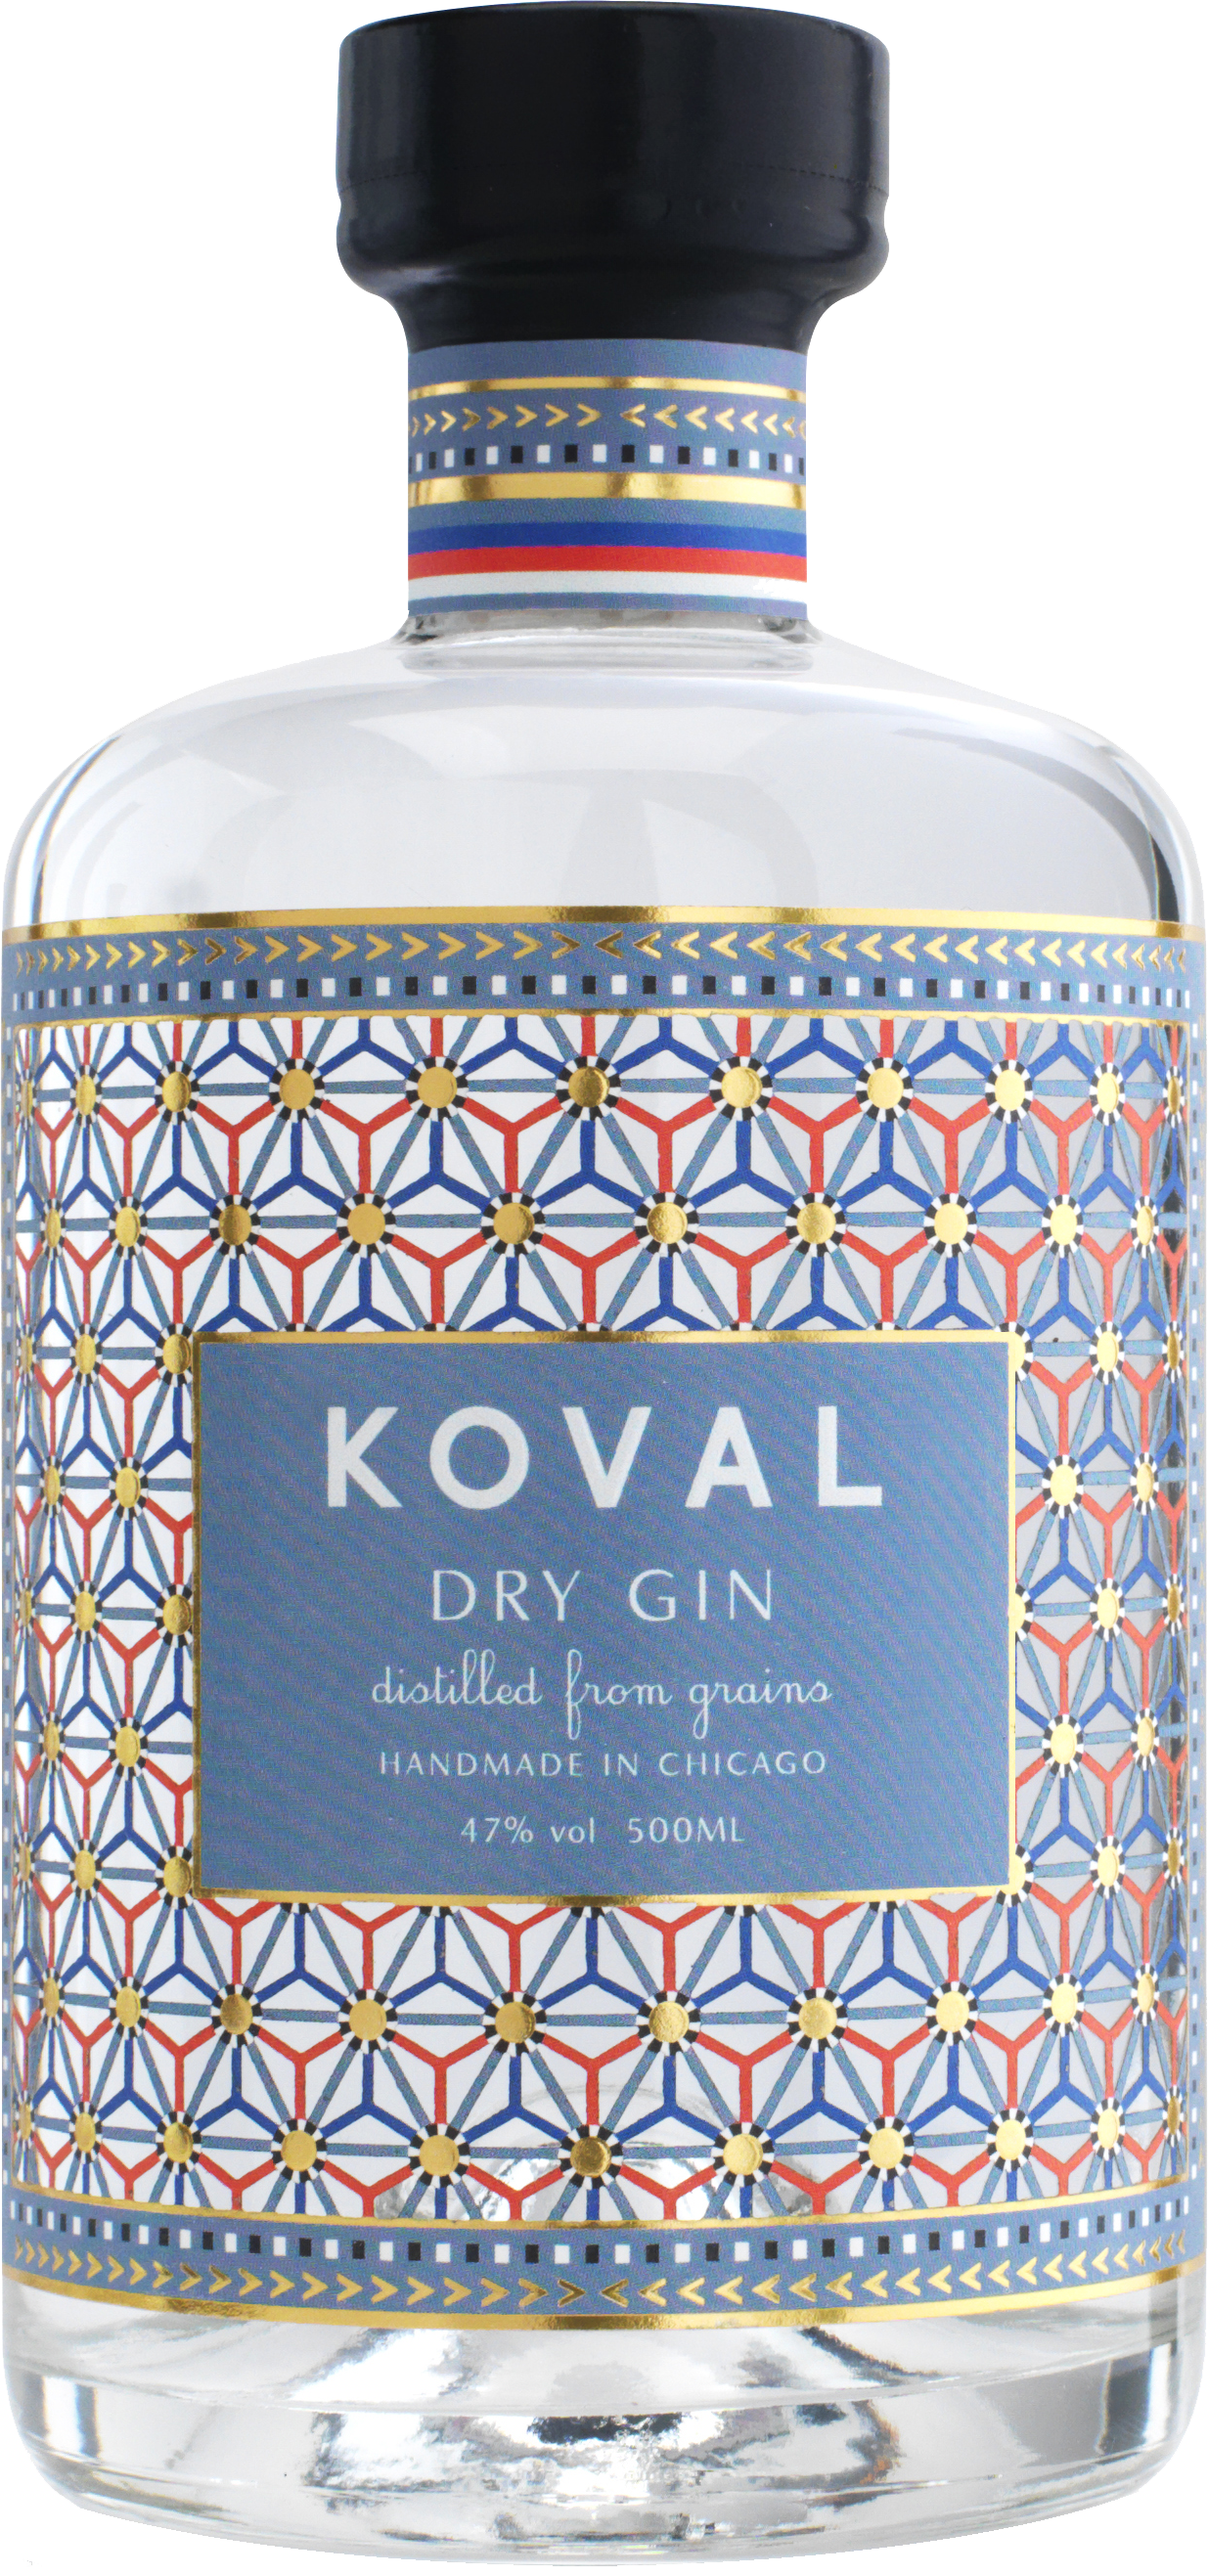 KOVAL - Dry Gin / 500mL